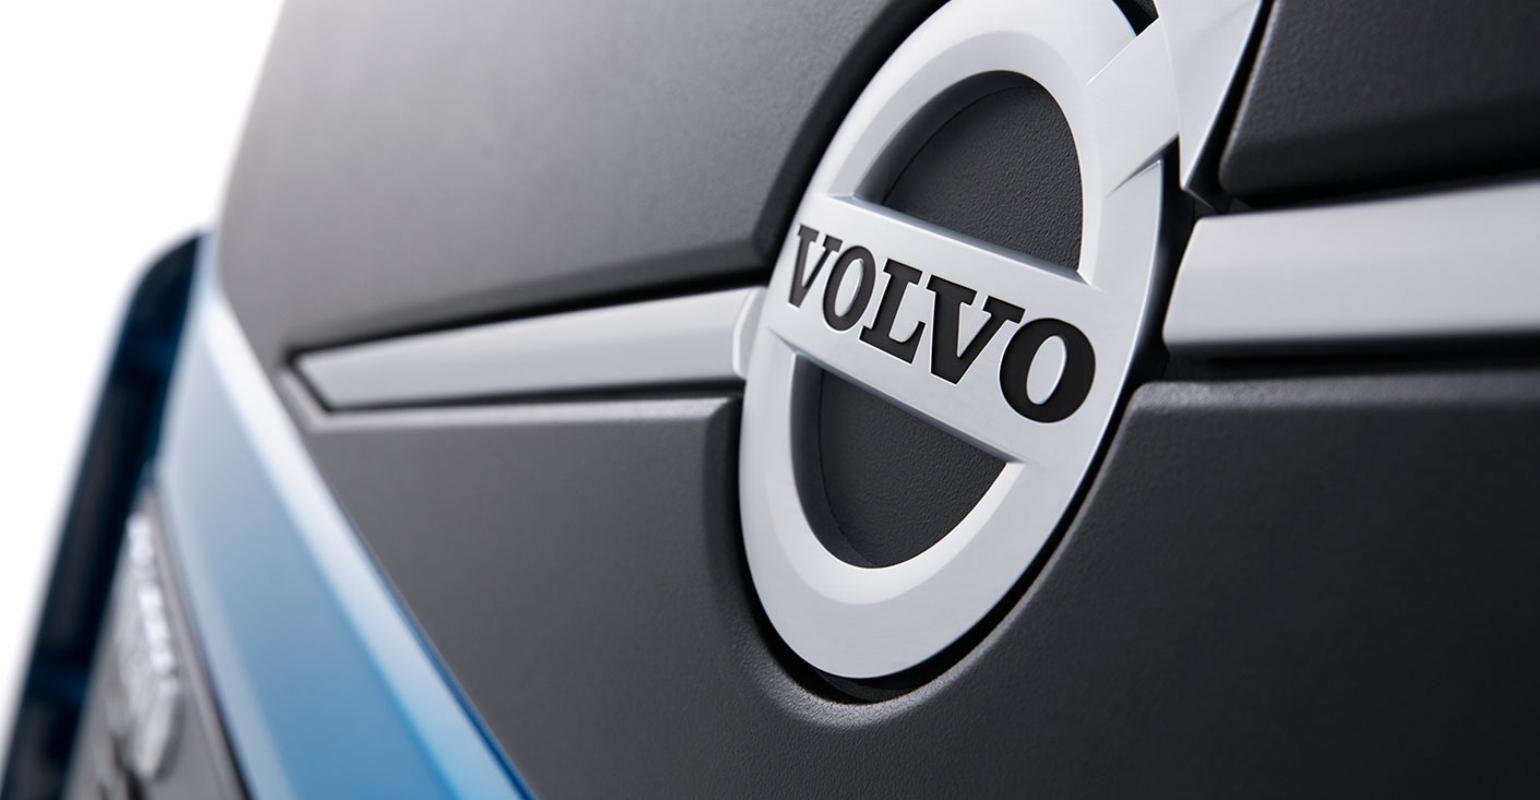 Volvo Truck Logo - Volvo Trucks Warns of Faulty Emissions Part | IndustryWeek